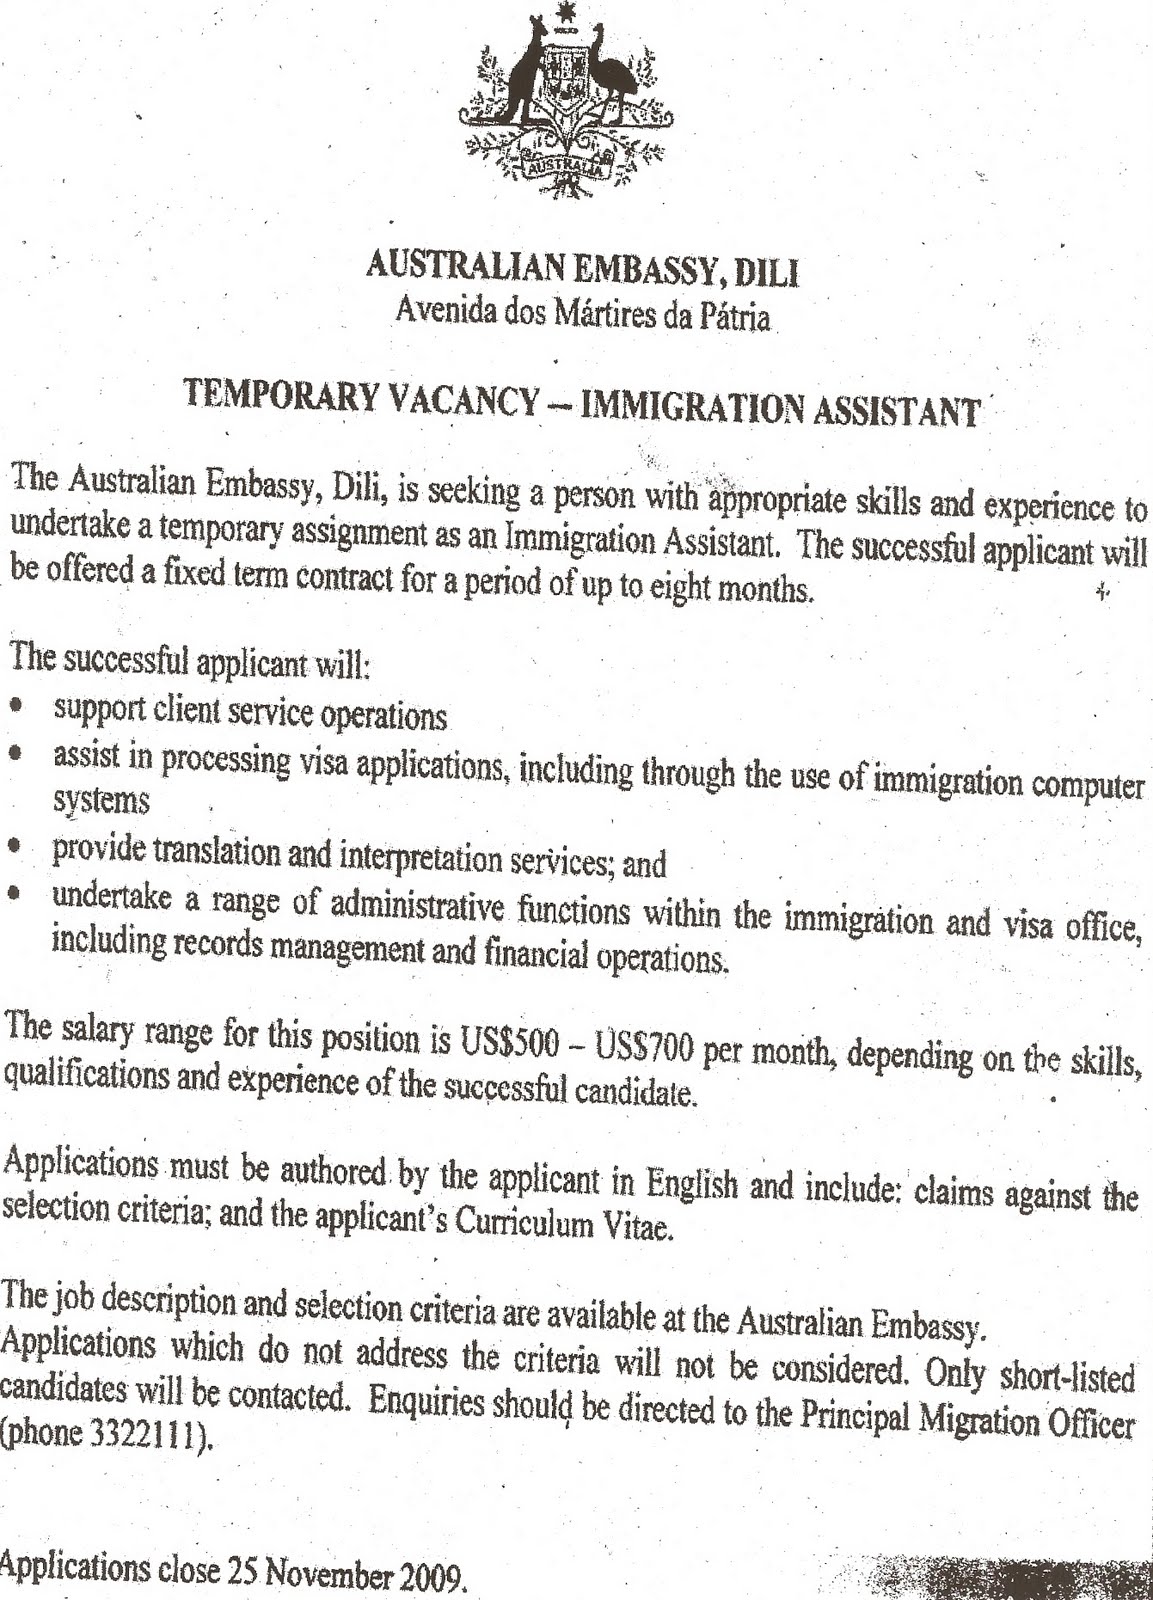 Cover letter for job application embassy